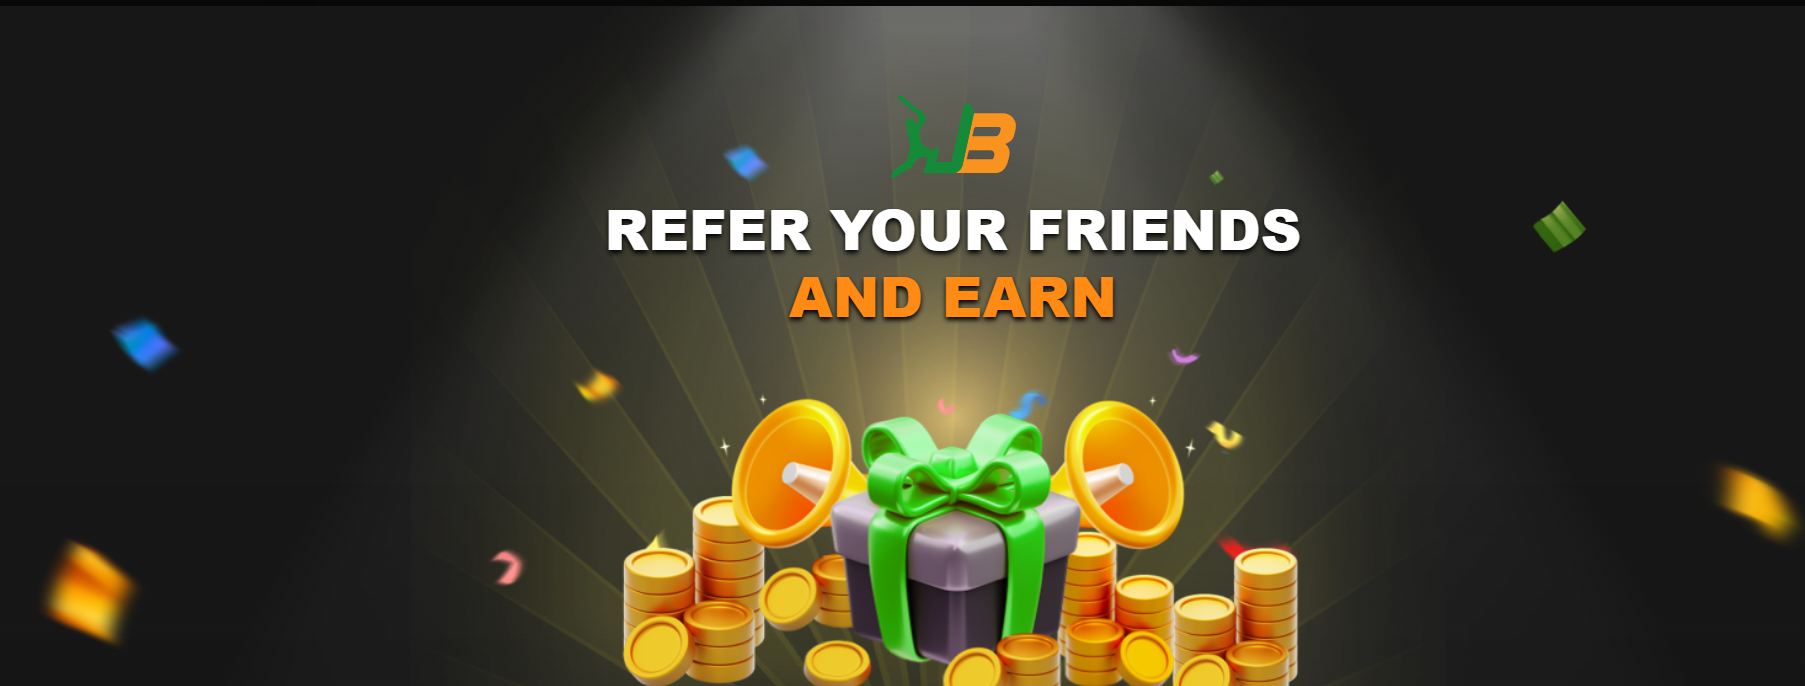 Jeetbuzz referral bonus